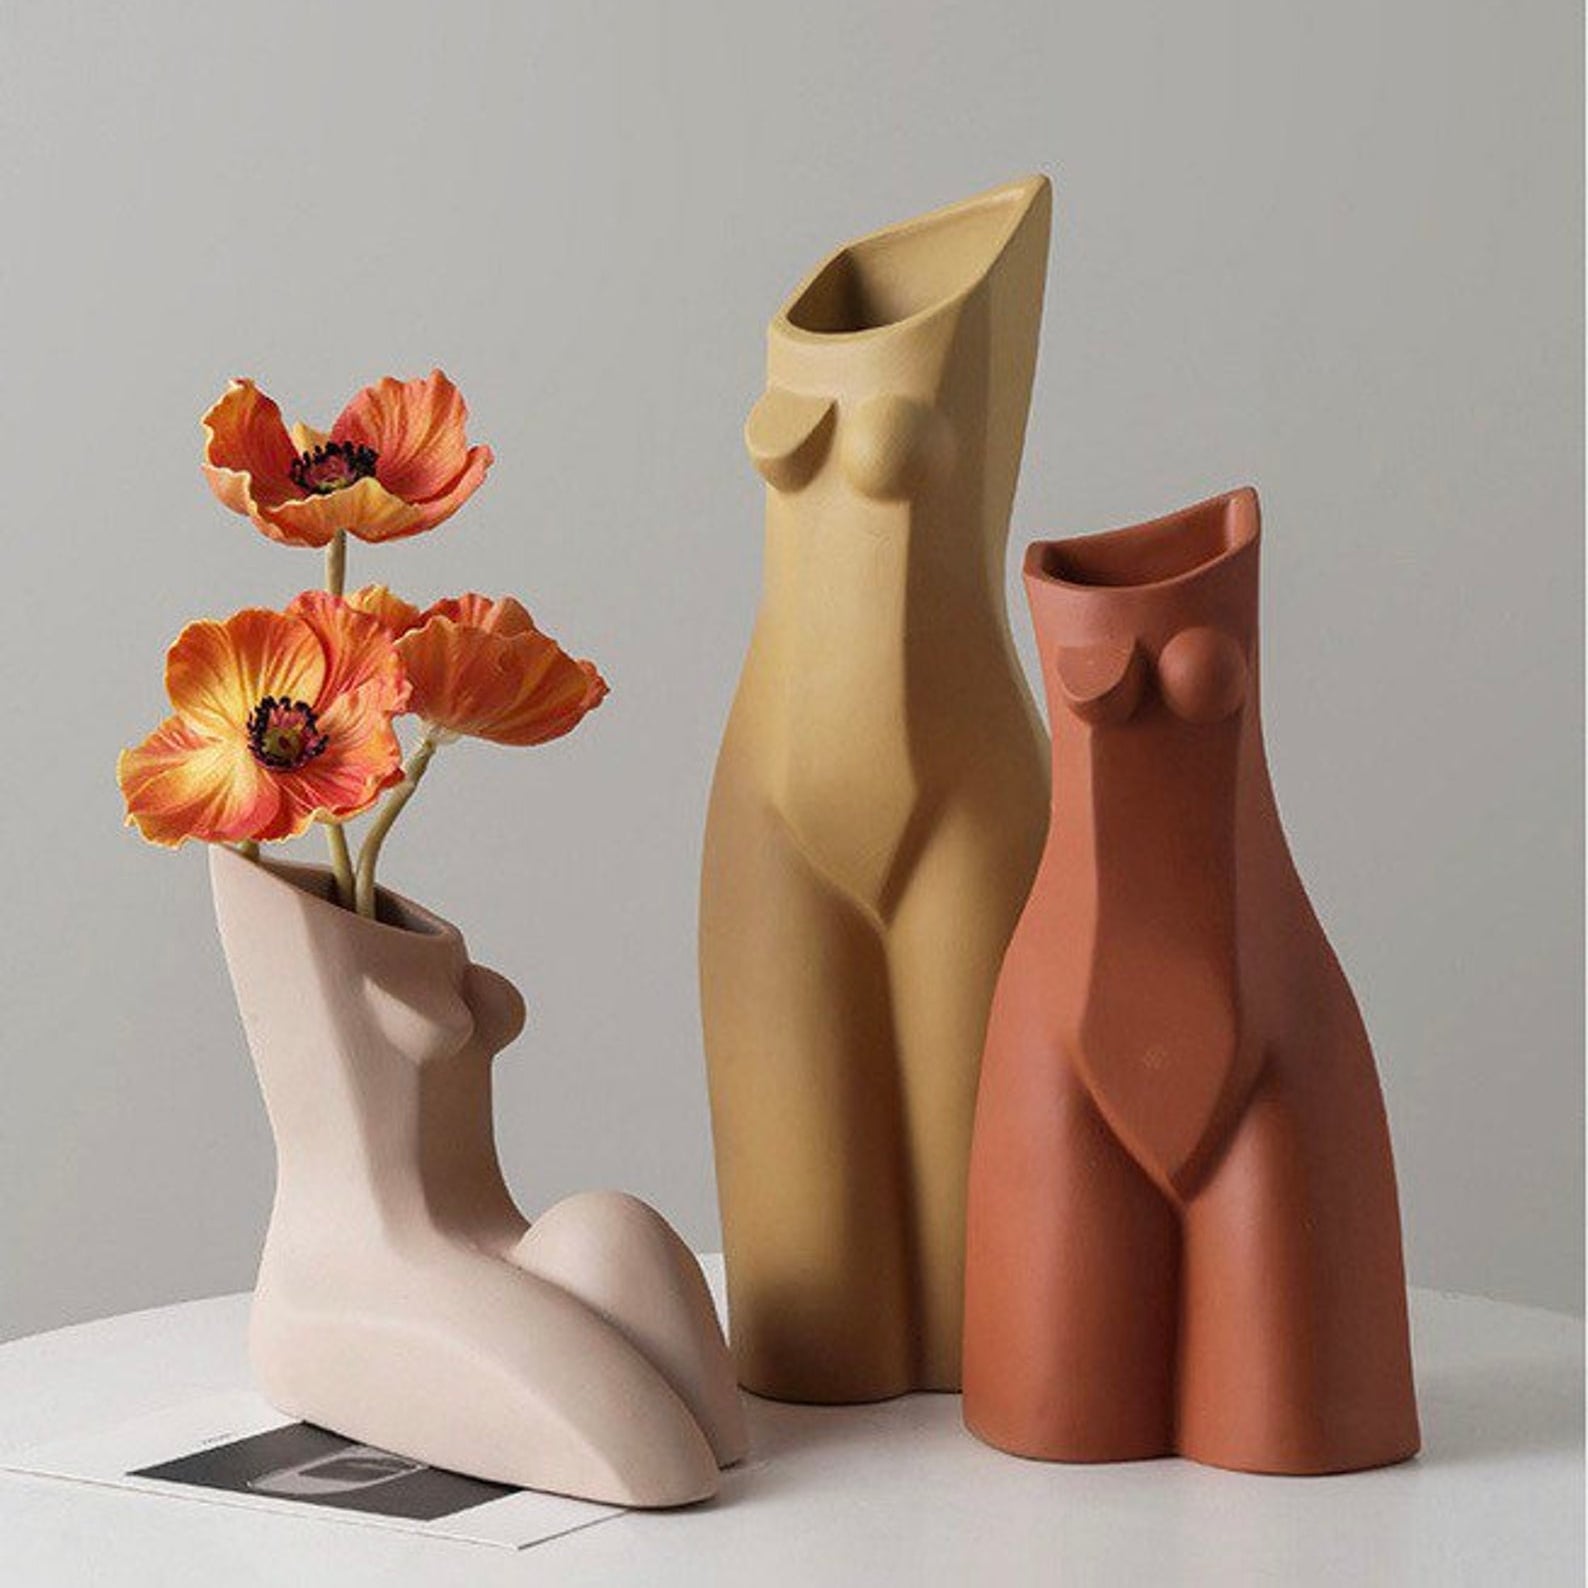 Vase Ceramics Human Body Bum Nude Abstract Flower Vase Decoration Home New I8J2 